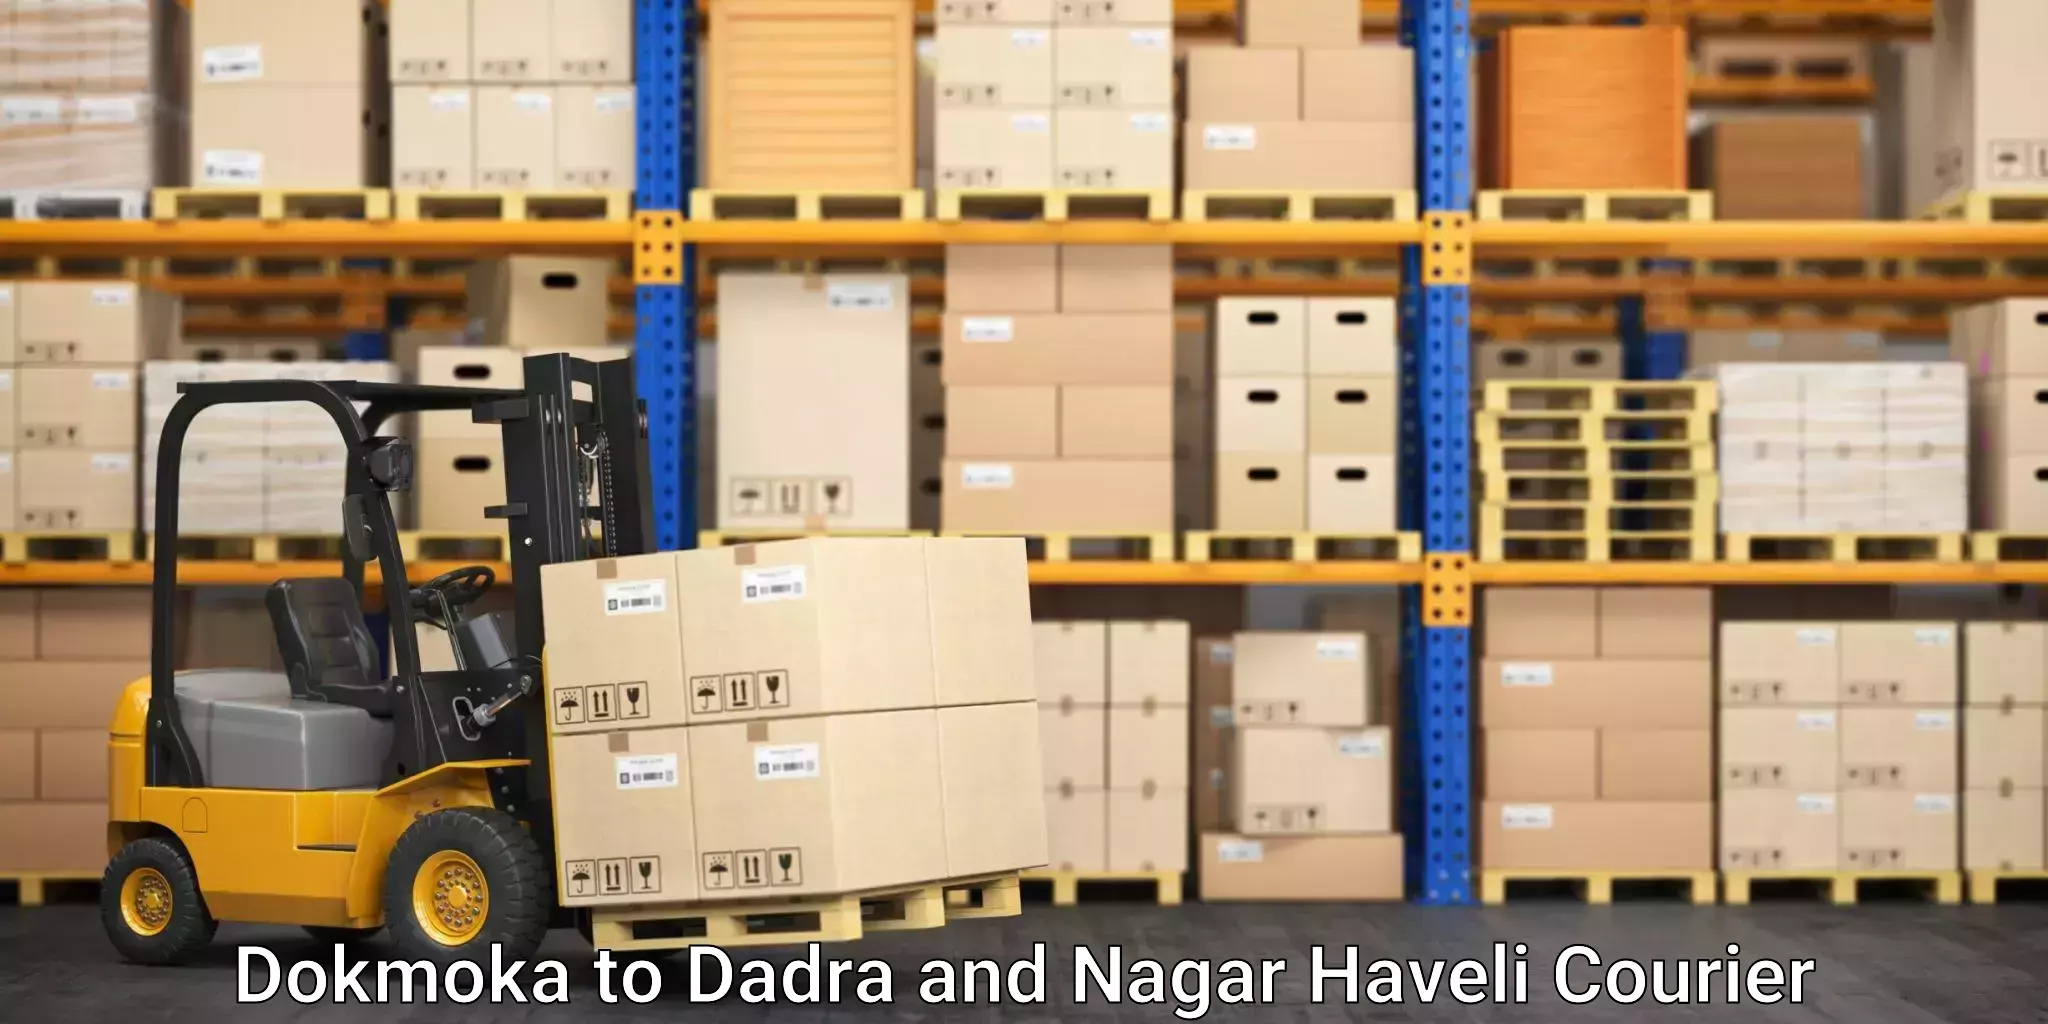 Express delivery capabilities Dokmoka to Dadra and Nagar Haveli